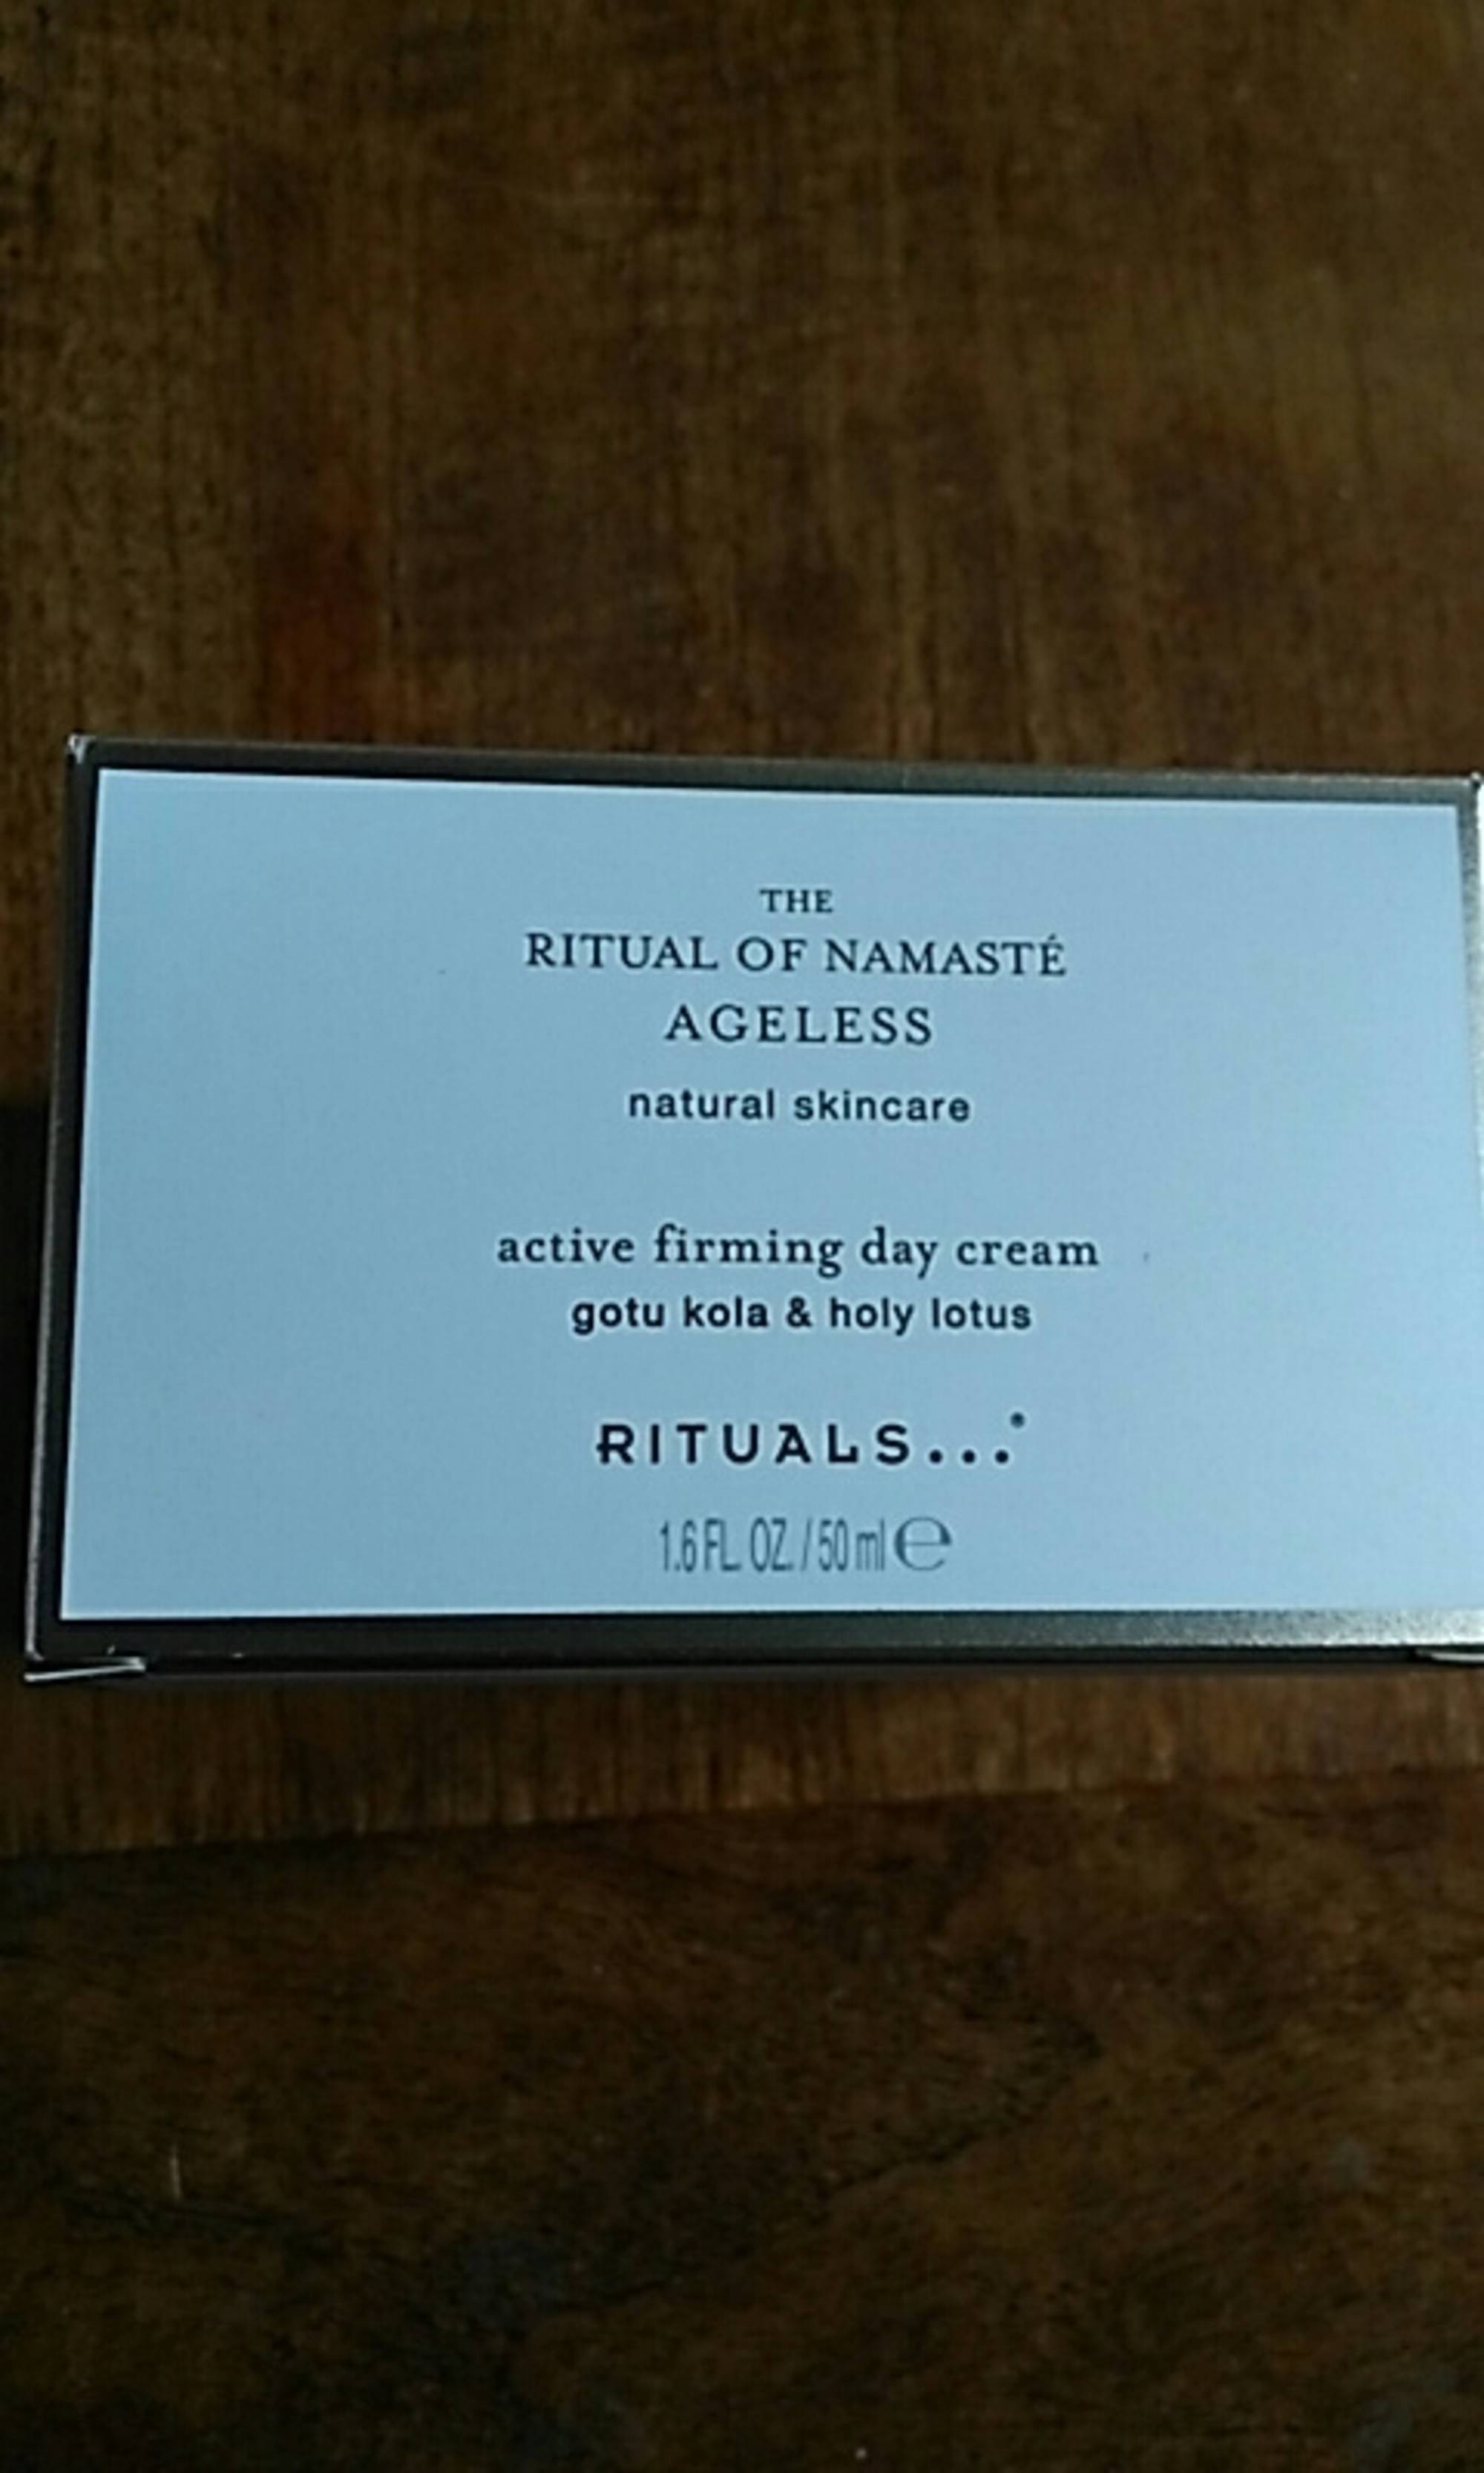 RITUALS - The Ritual of Namasté Ageless - Active firming day cream